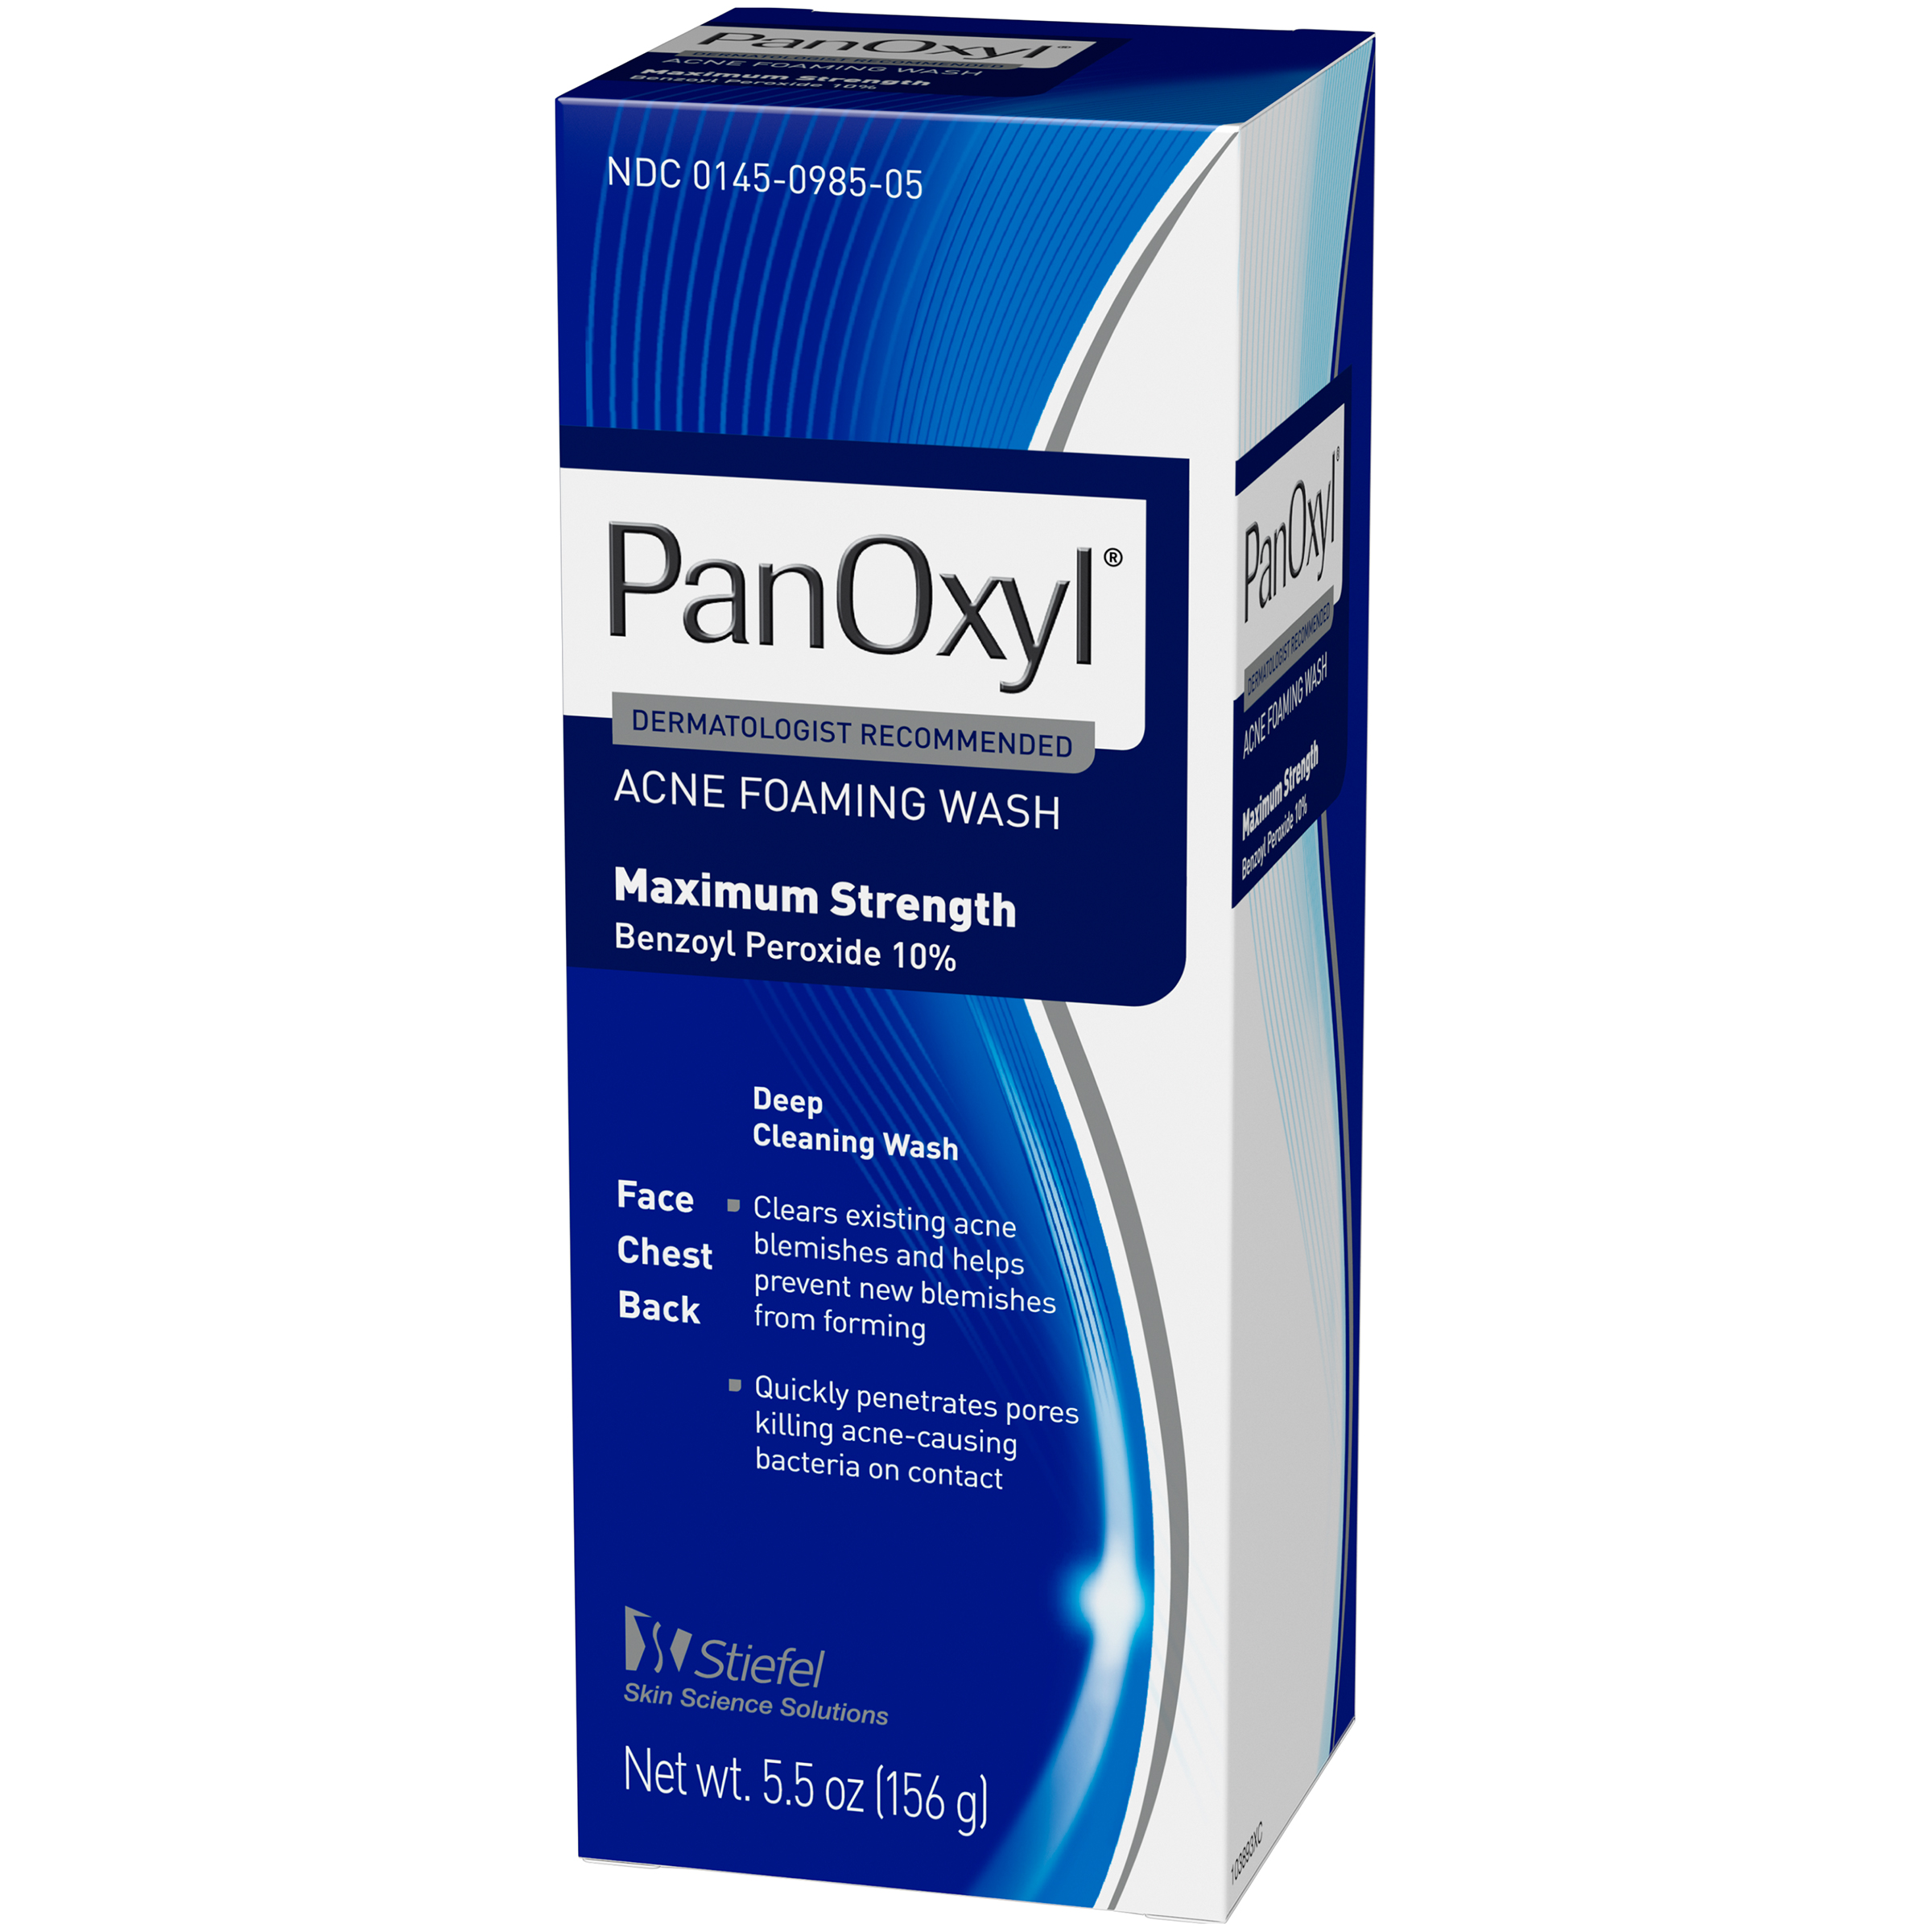 PanOxyl Foaming Acne Wash, Maximum Strength, 10% Benzoyl Peroxide - 5.5 oz - image 4 of 4